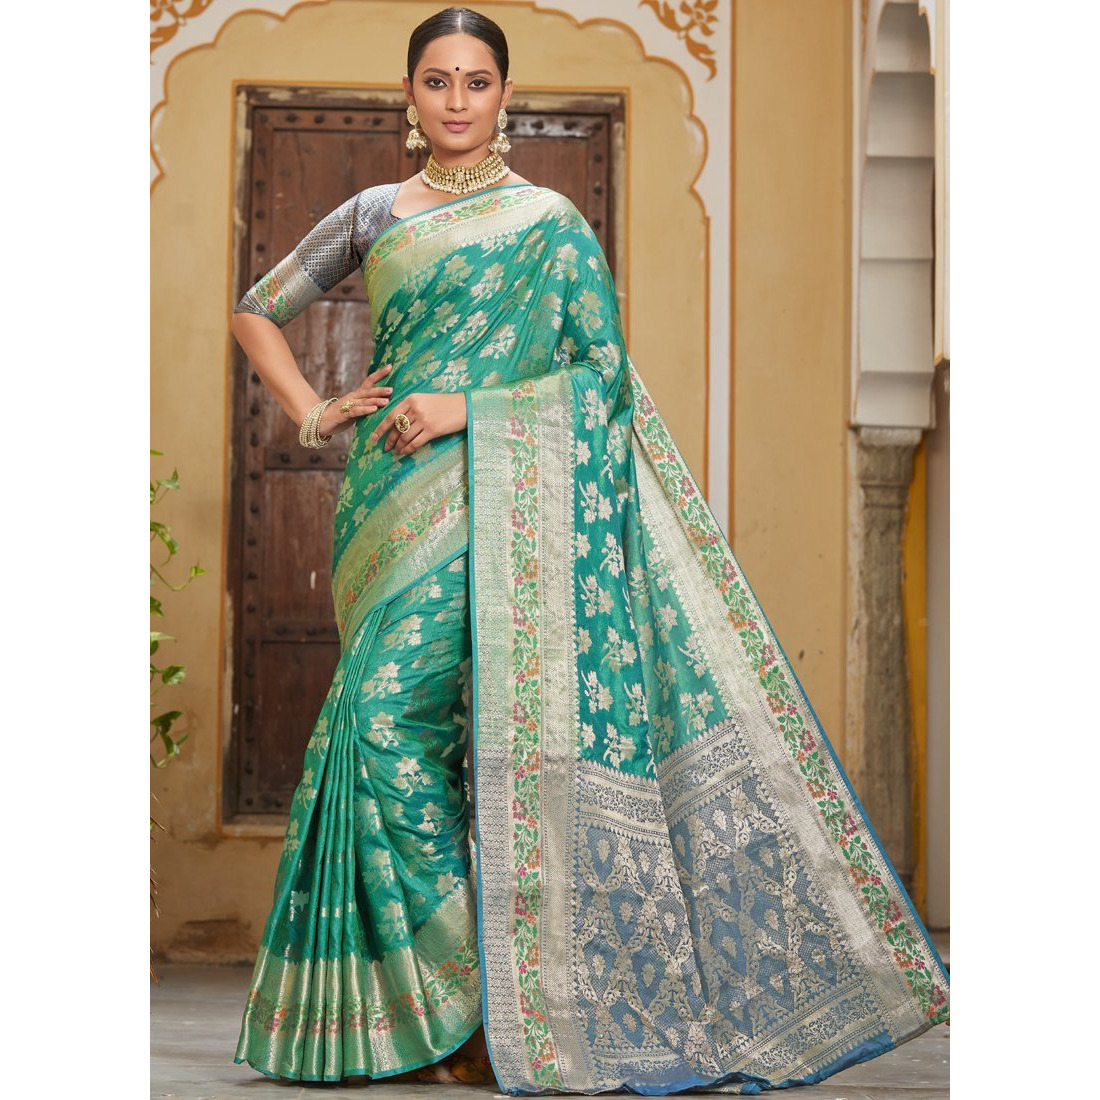 Designer Turquoise Banarasi Silk Traditional Saree For Women's